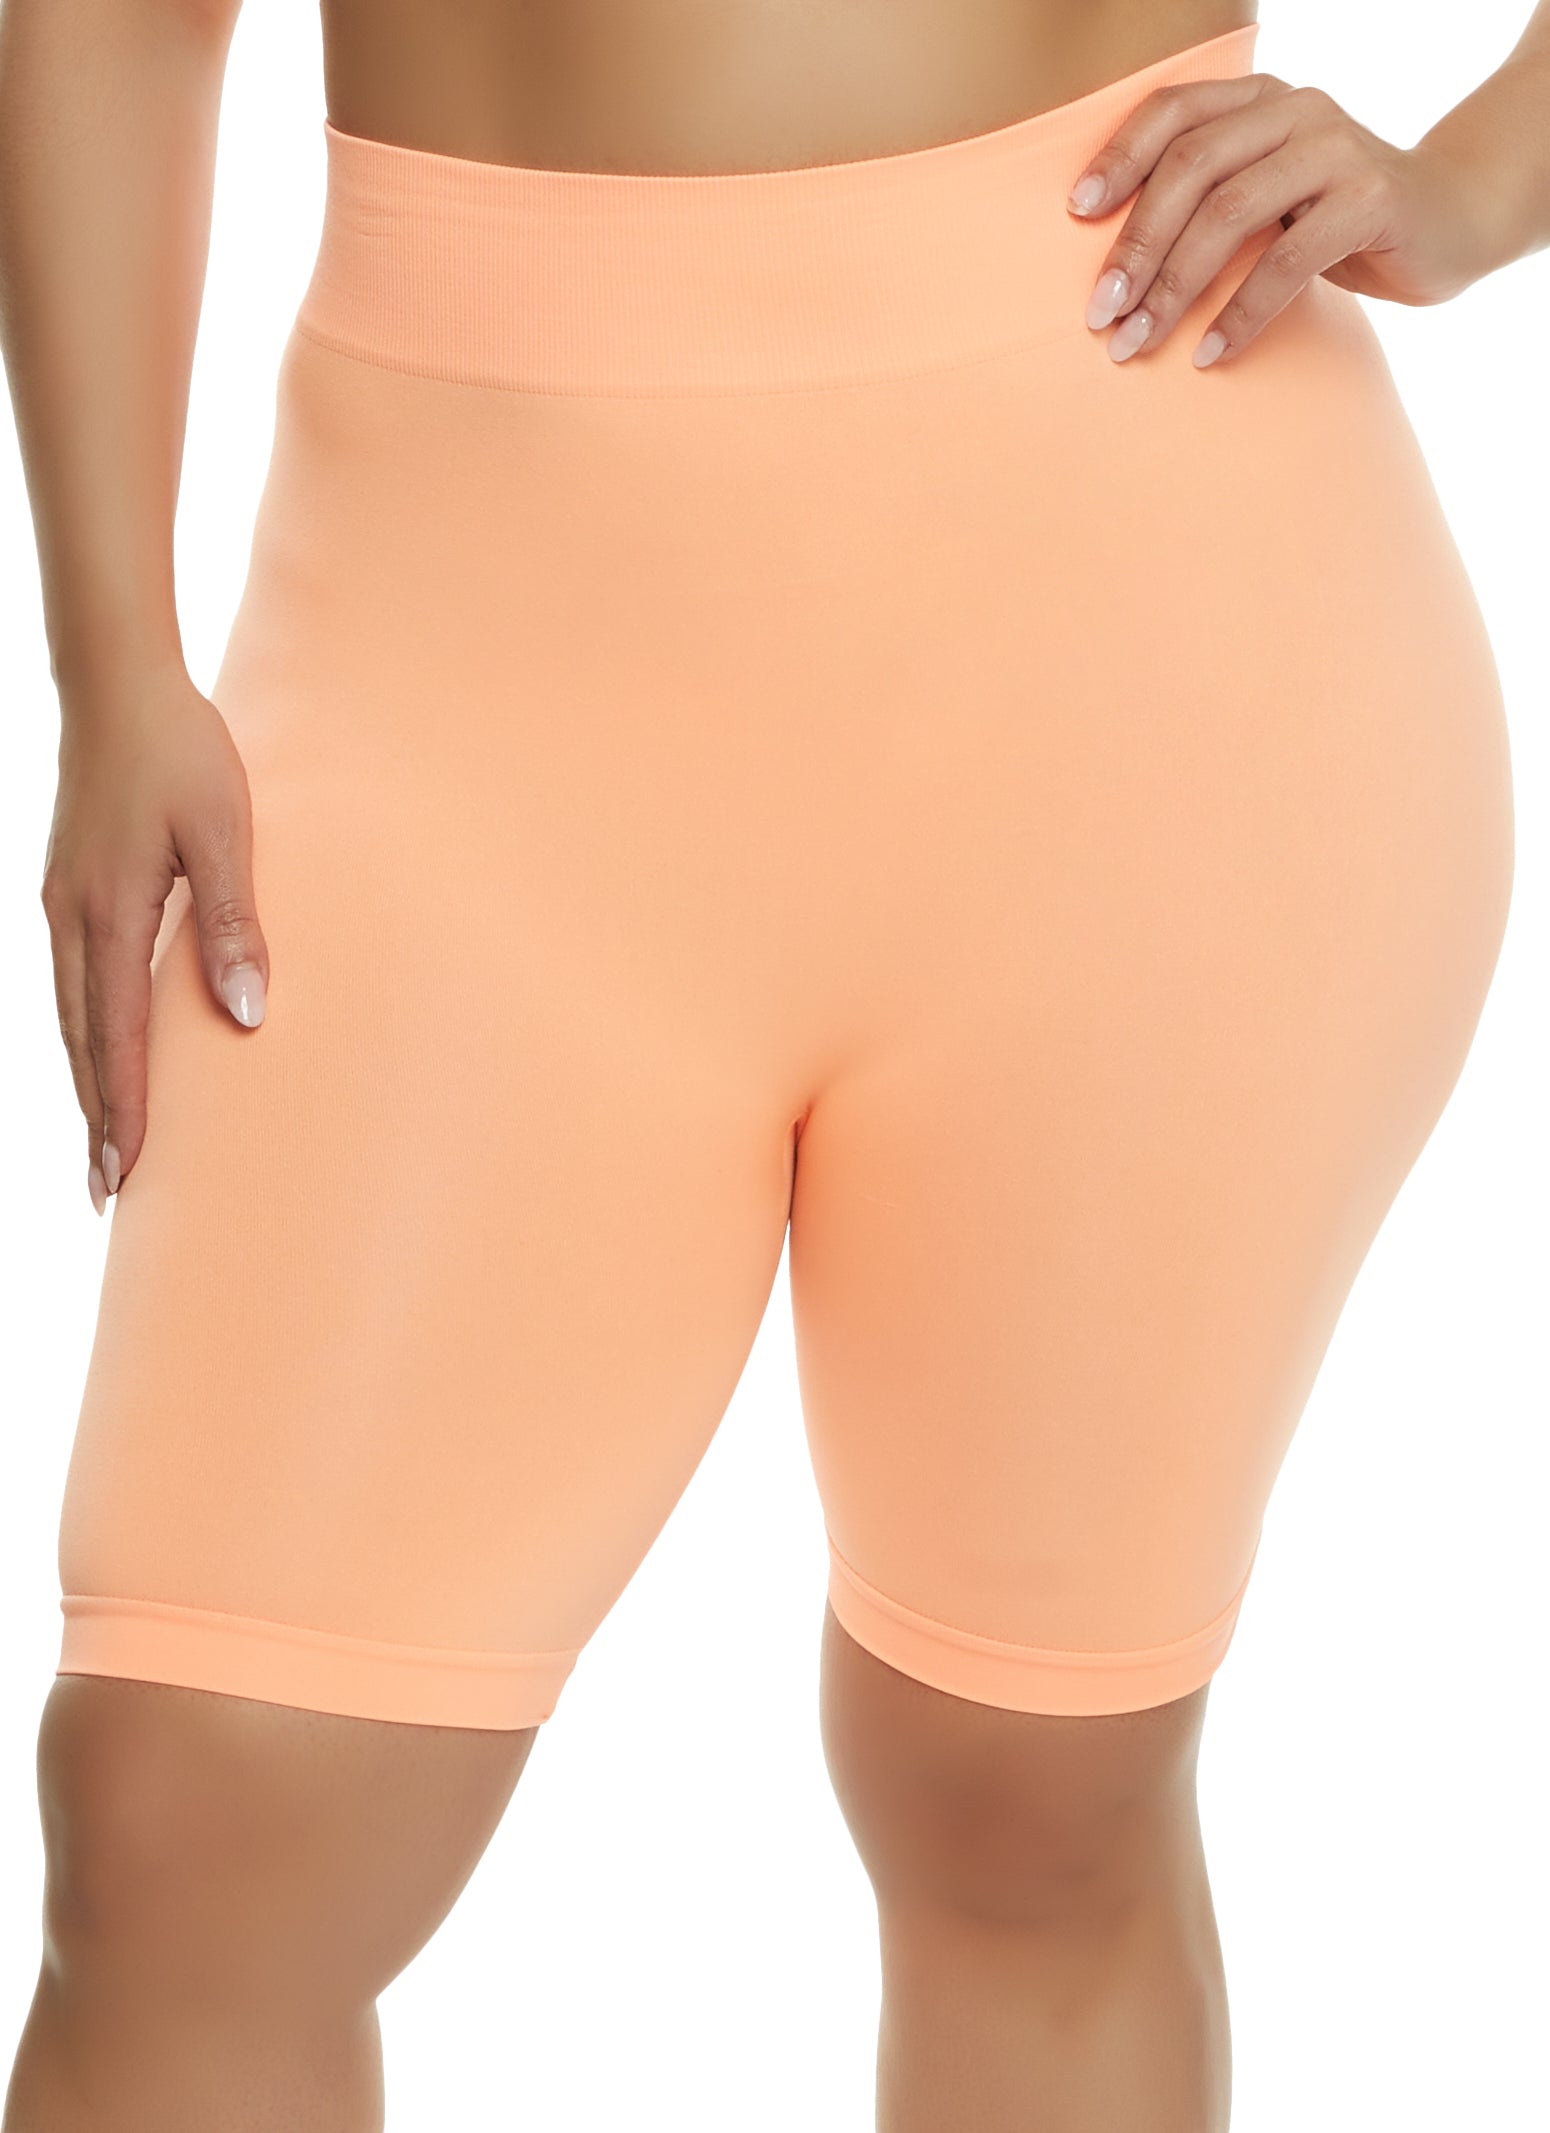 Zodggu Womens Orange Junior Shorts Womens Plus Size Comfy